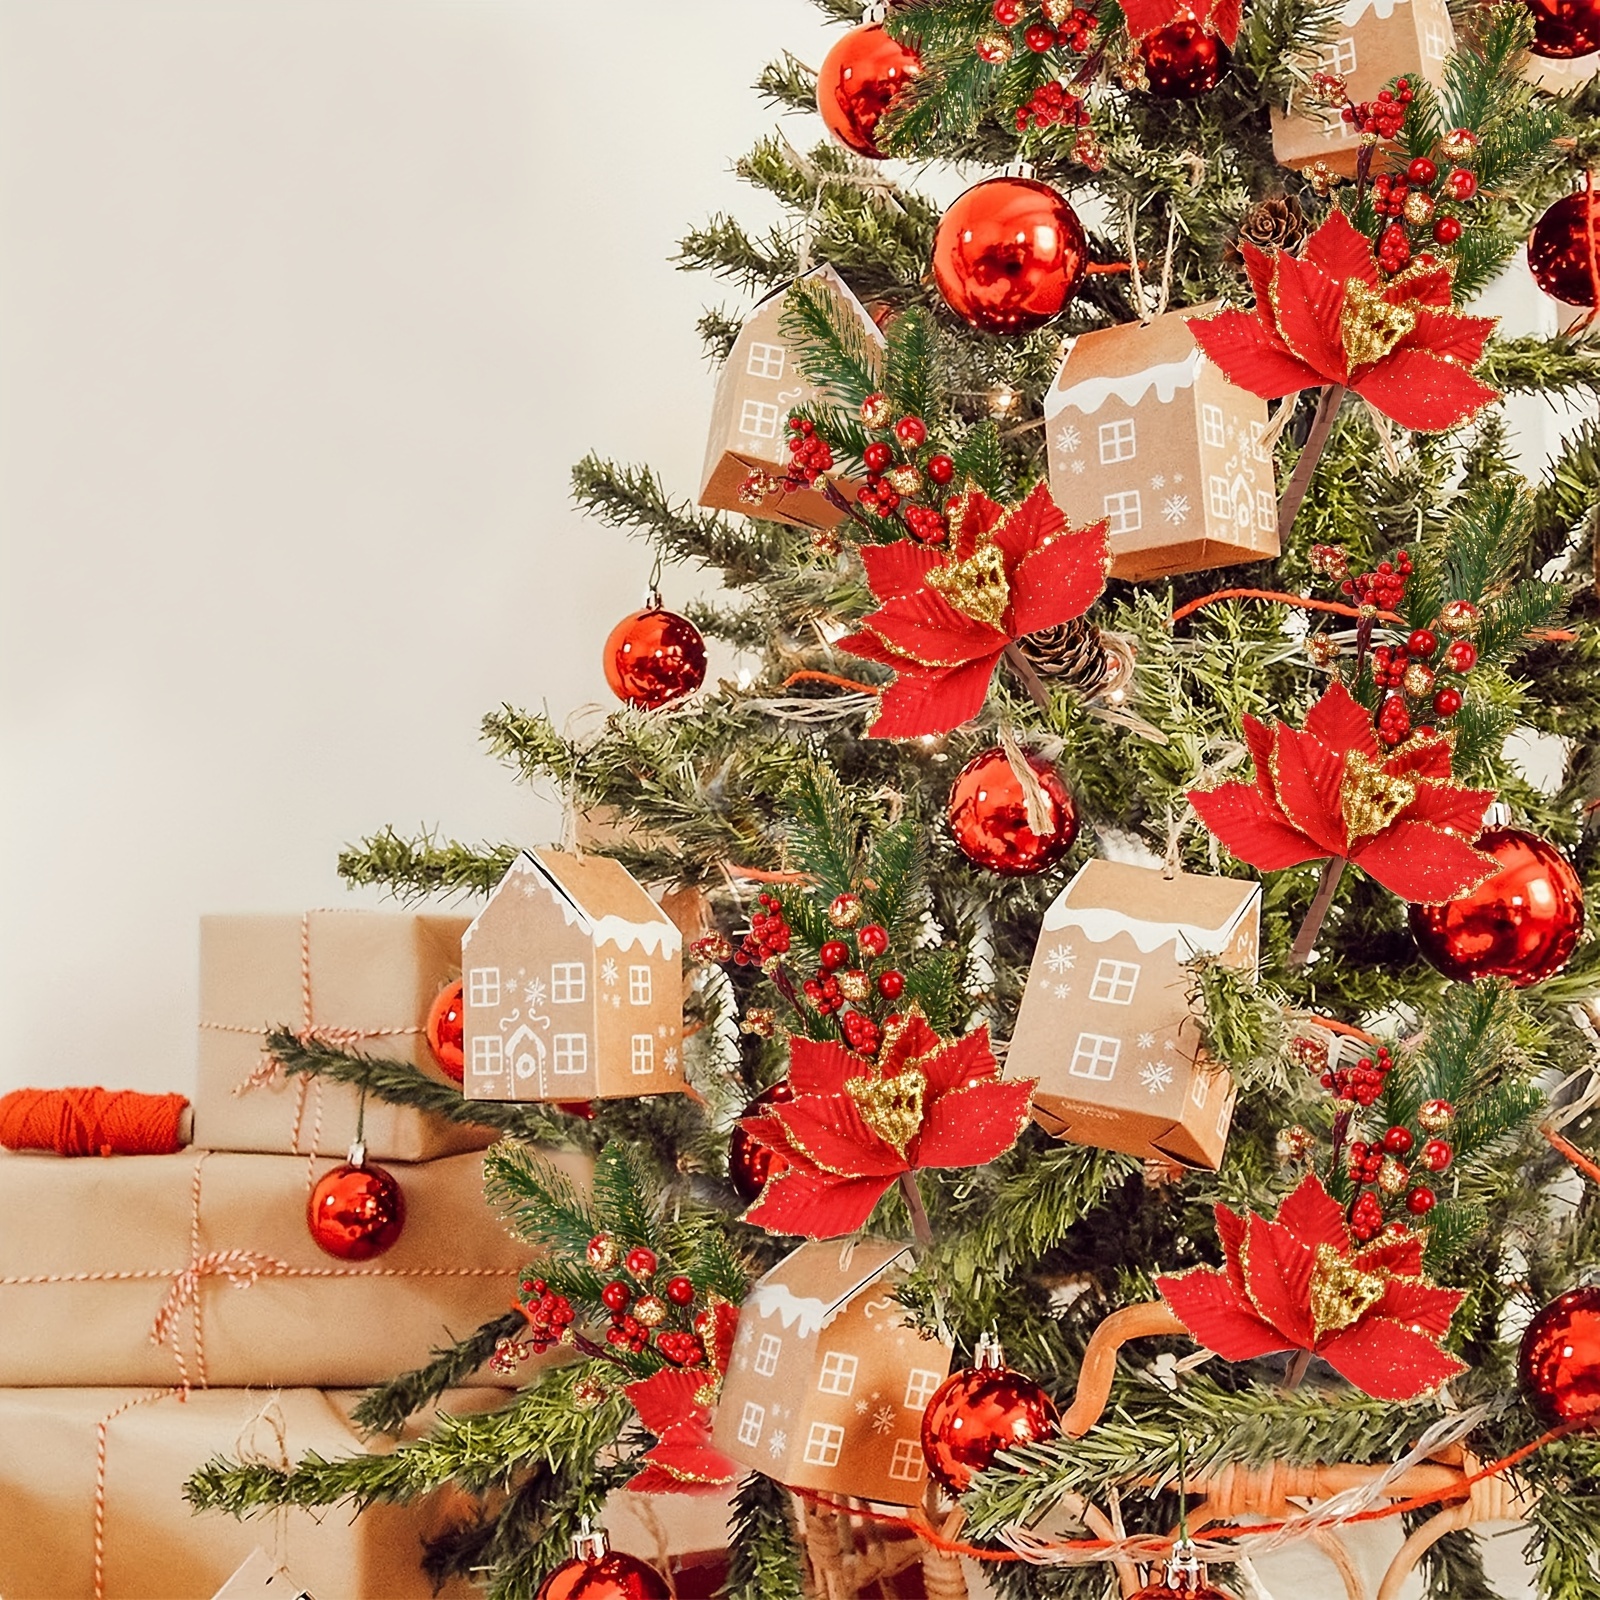 Christmas Tree Gift - Fruiting Bonsai Gift set